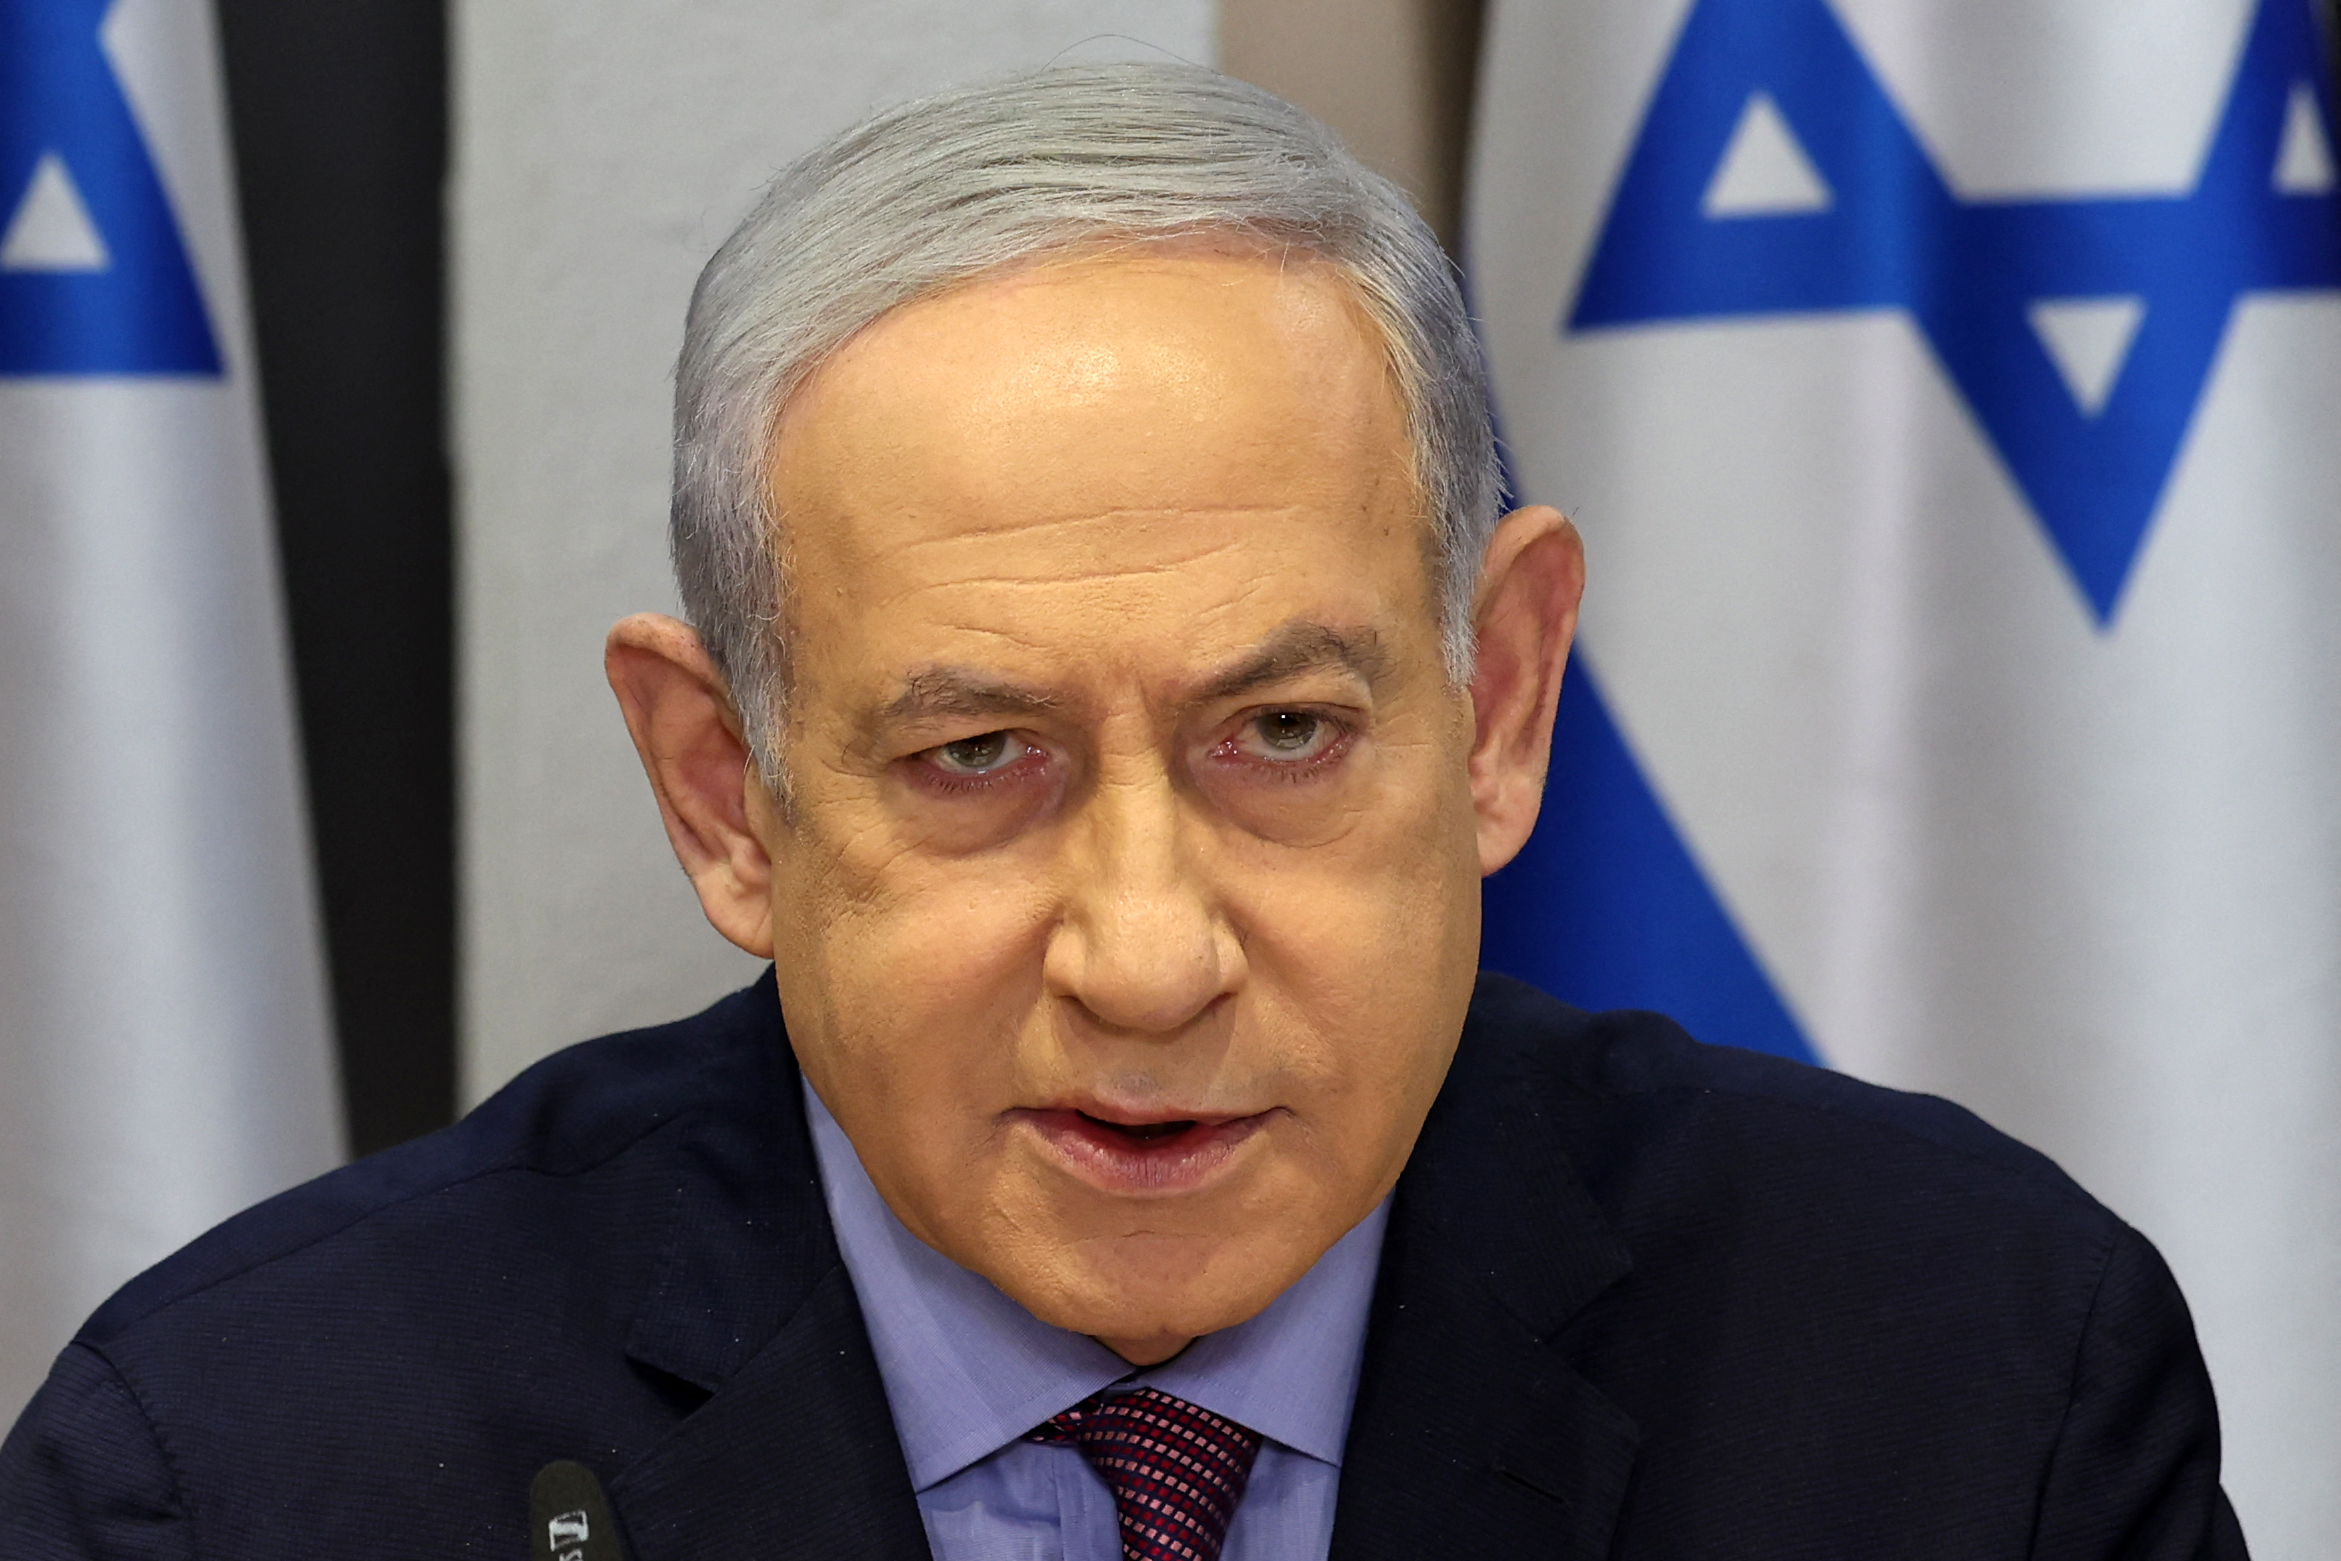 Netanyahu to address US Congress 'soon', says House Speaker